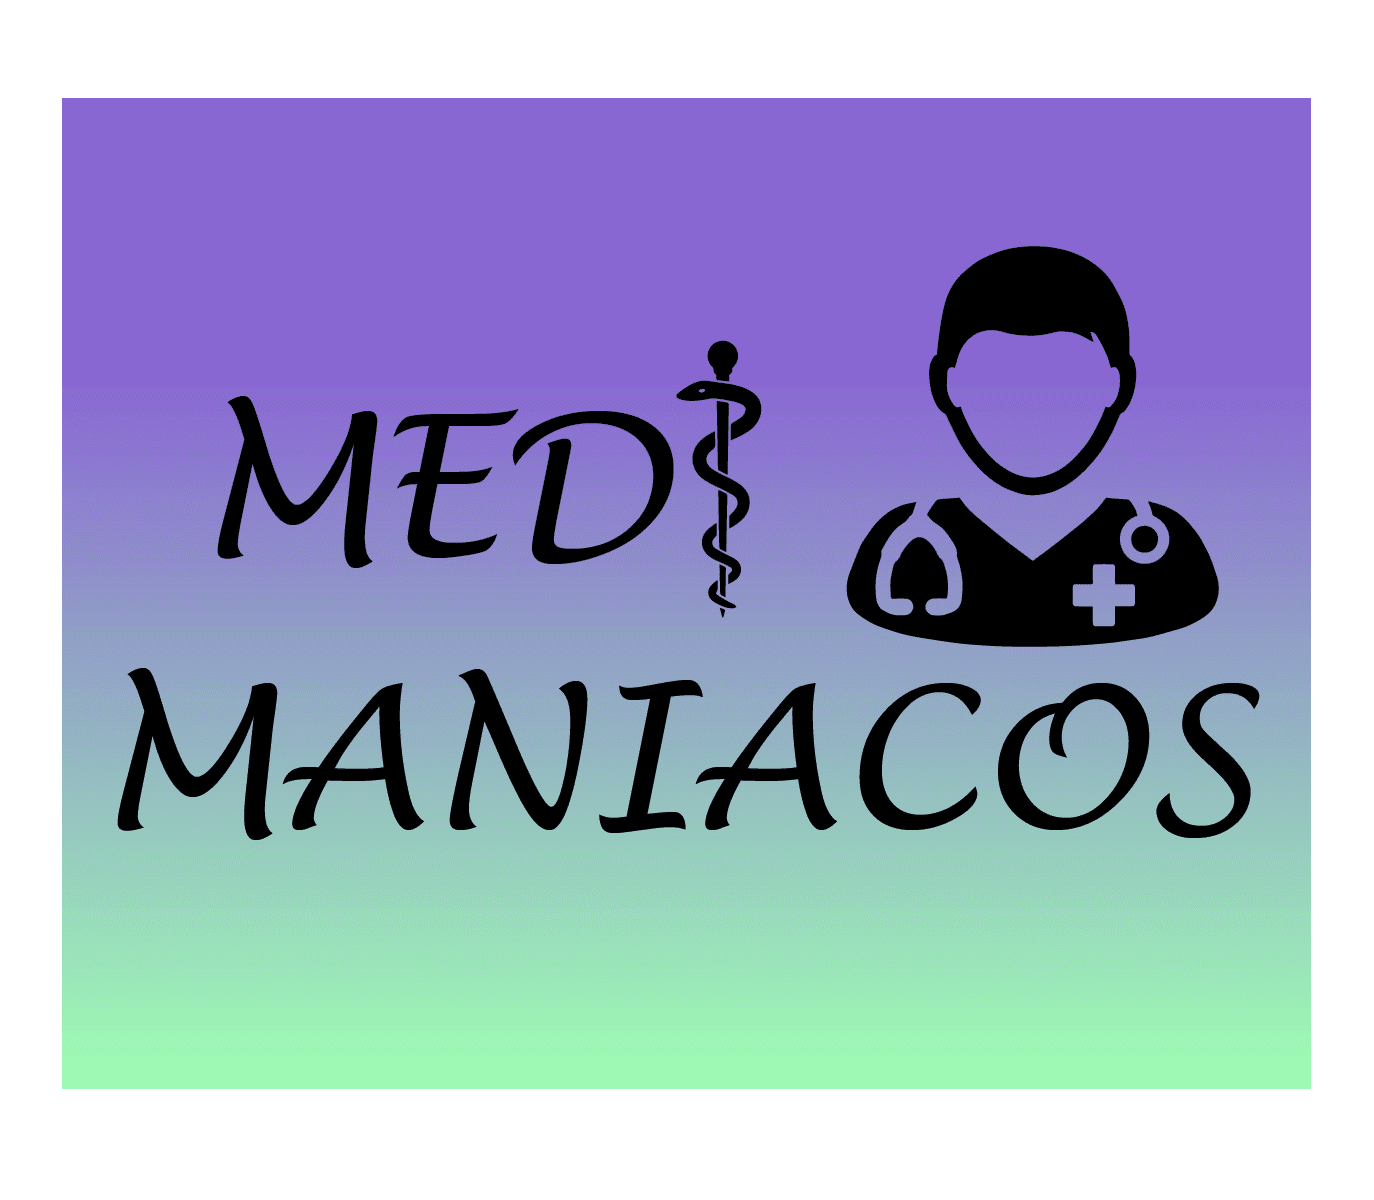 Medimaniacos